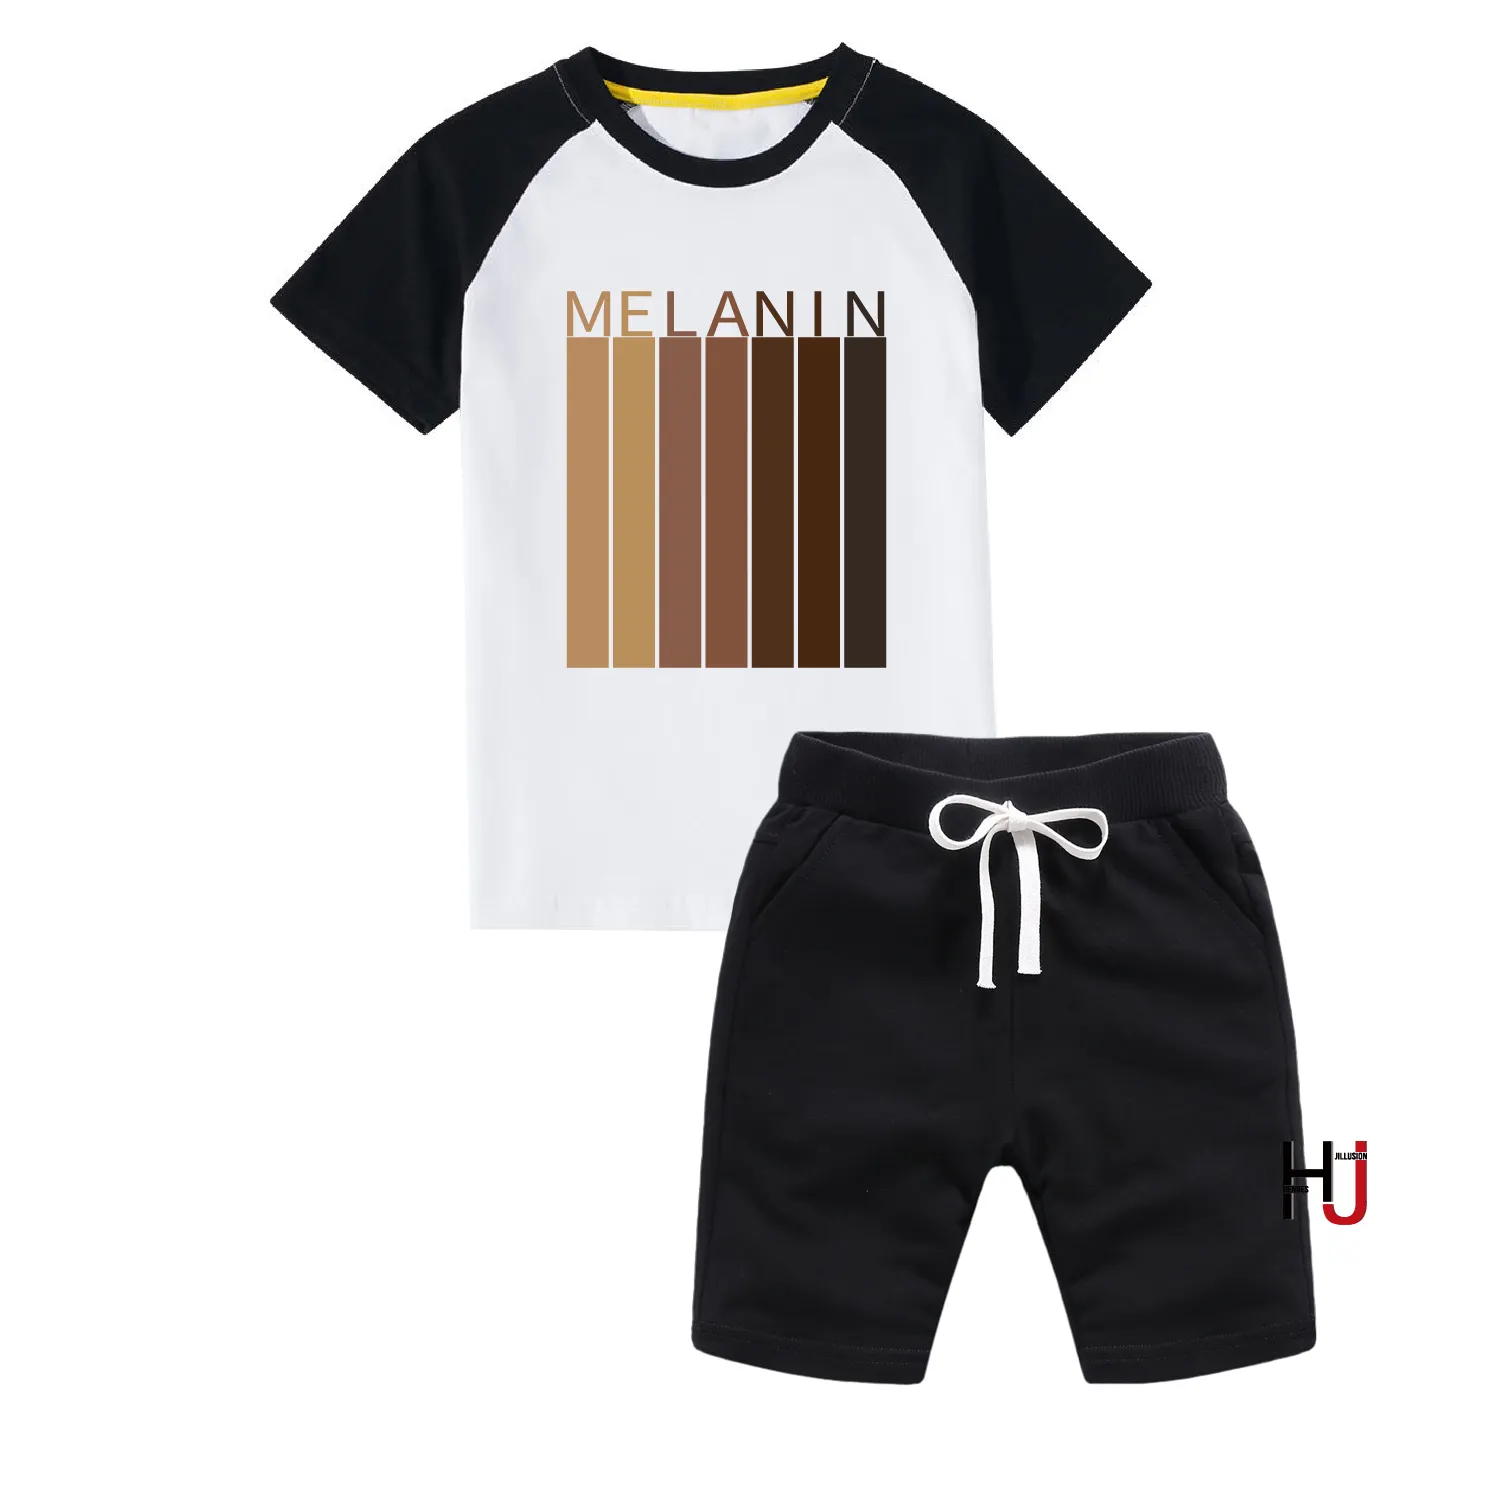 Trending Toddlers tees shorts sets Summer Short Sleeve Melanin Art Printed Clothing Girls boys Kid T Shirt pants suits 2pcs